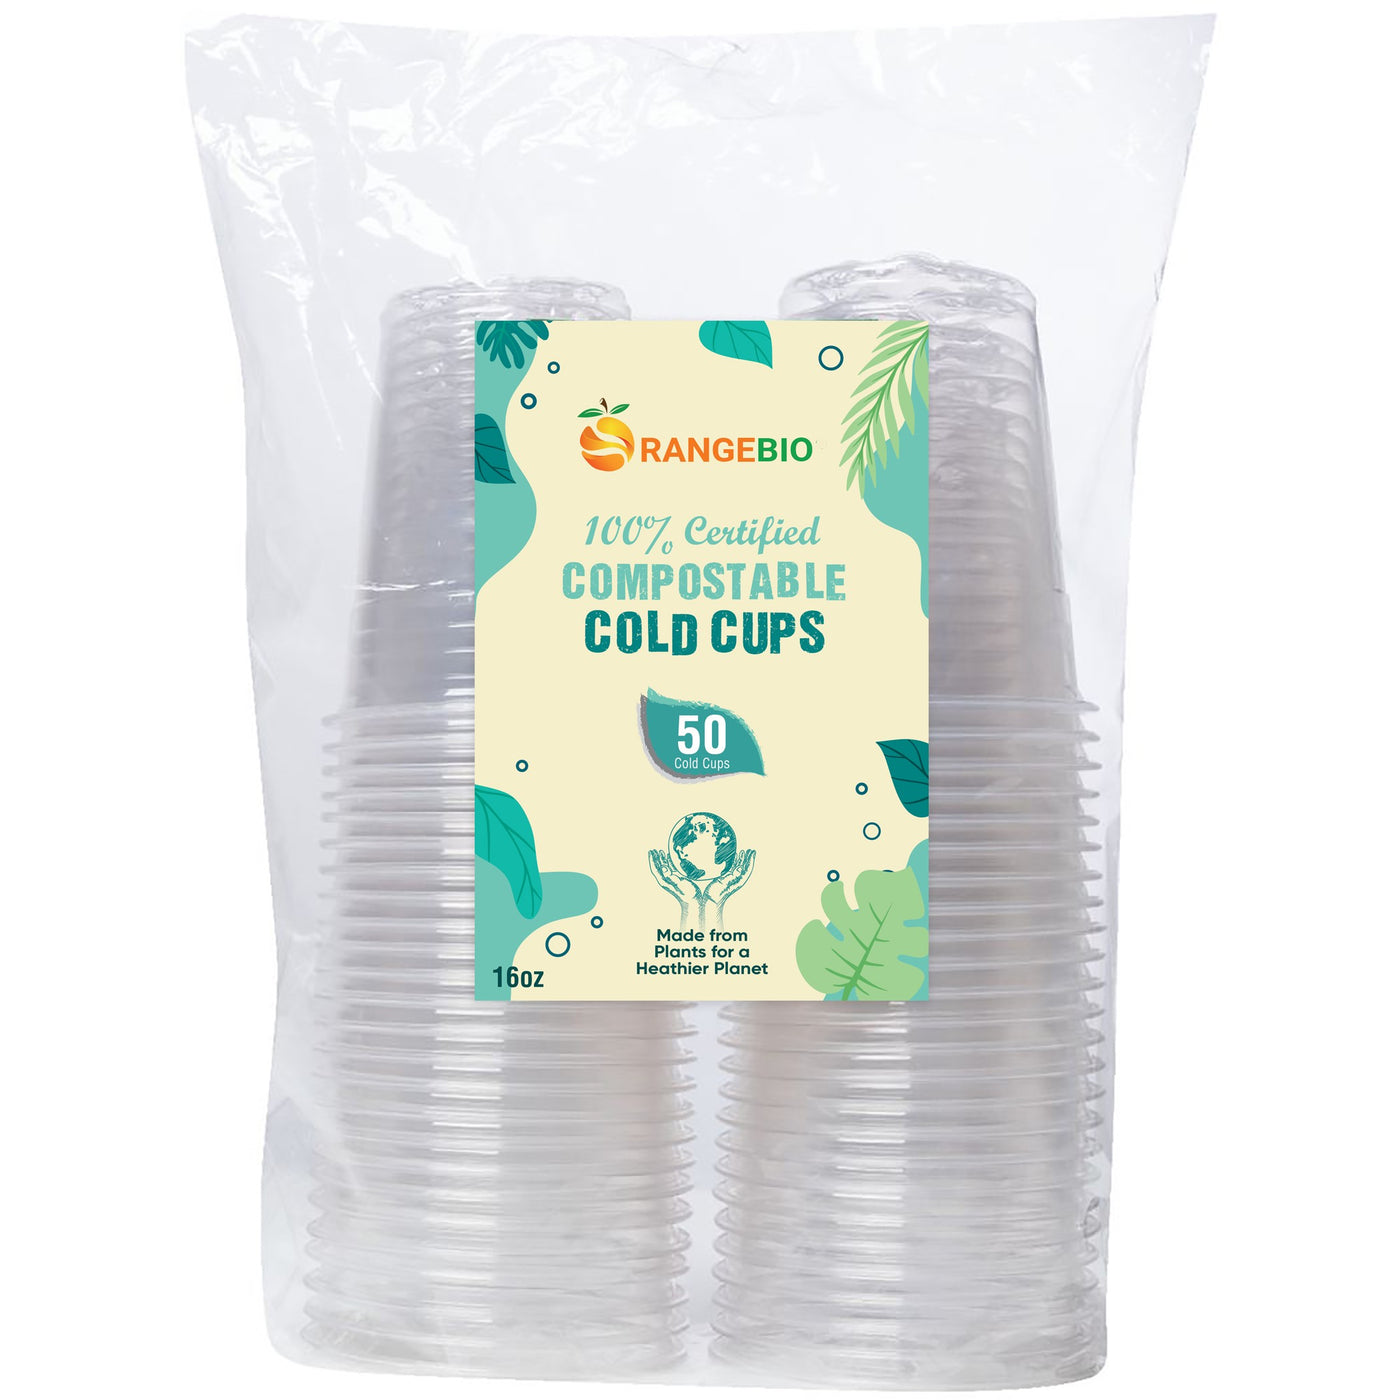 OrangeBio 16 Oz Certified Compostable Cold Cups | PLA |50 Count